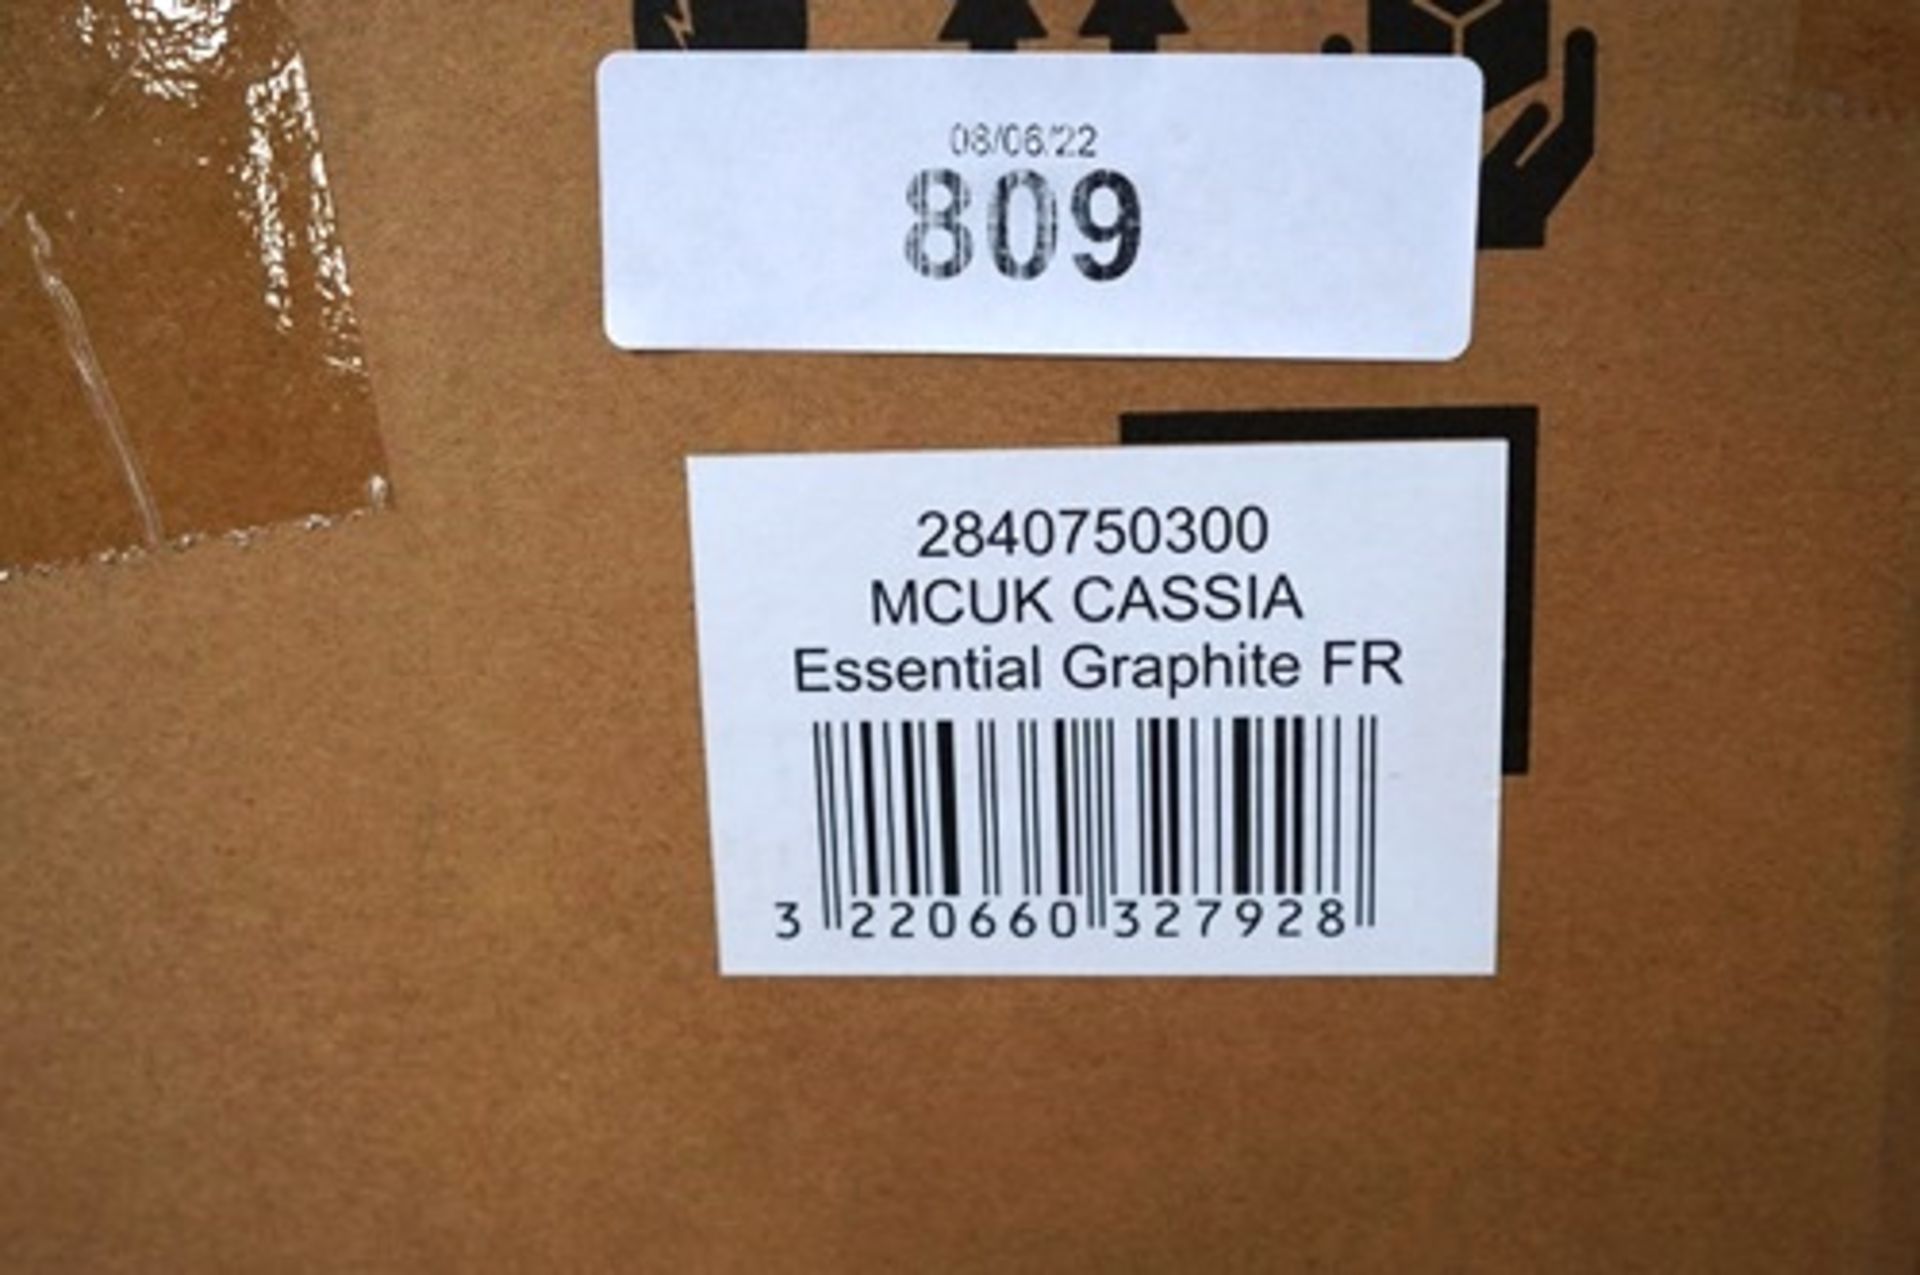 1 x Maxi Cosi Cassia rocker essential graphite 0-6M item code: 2840750300. -new in box- (GS36A) - Image 2 of 2